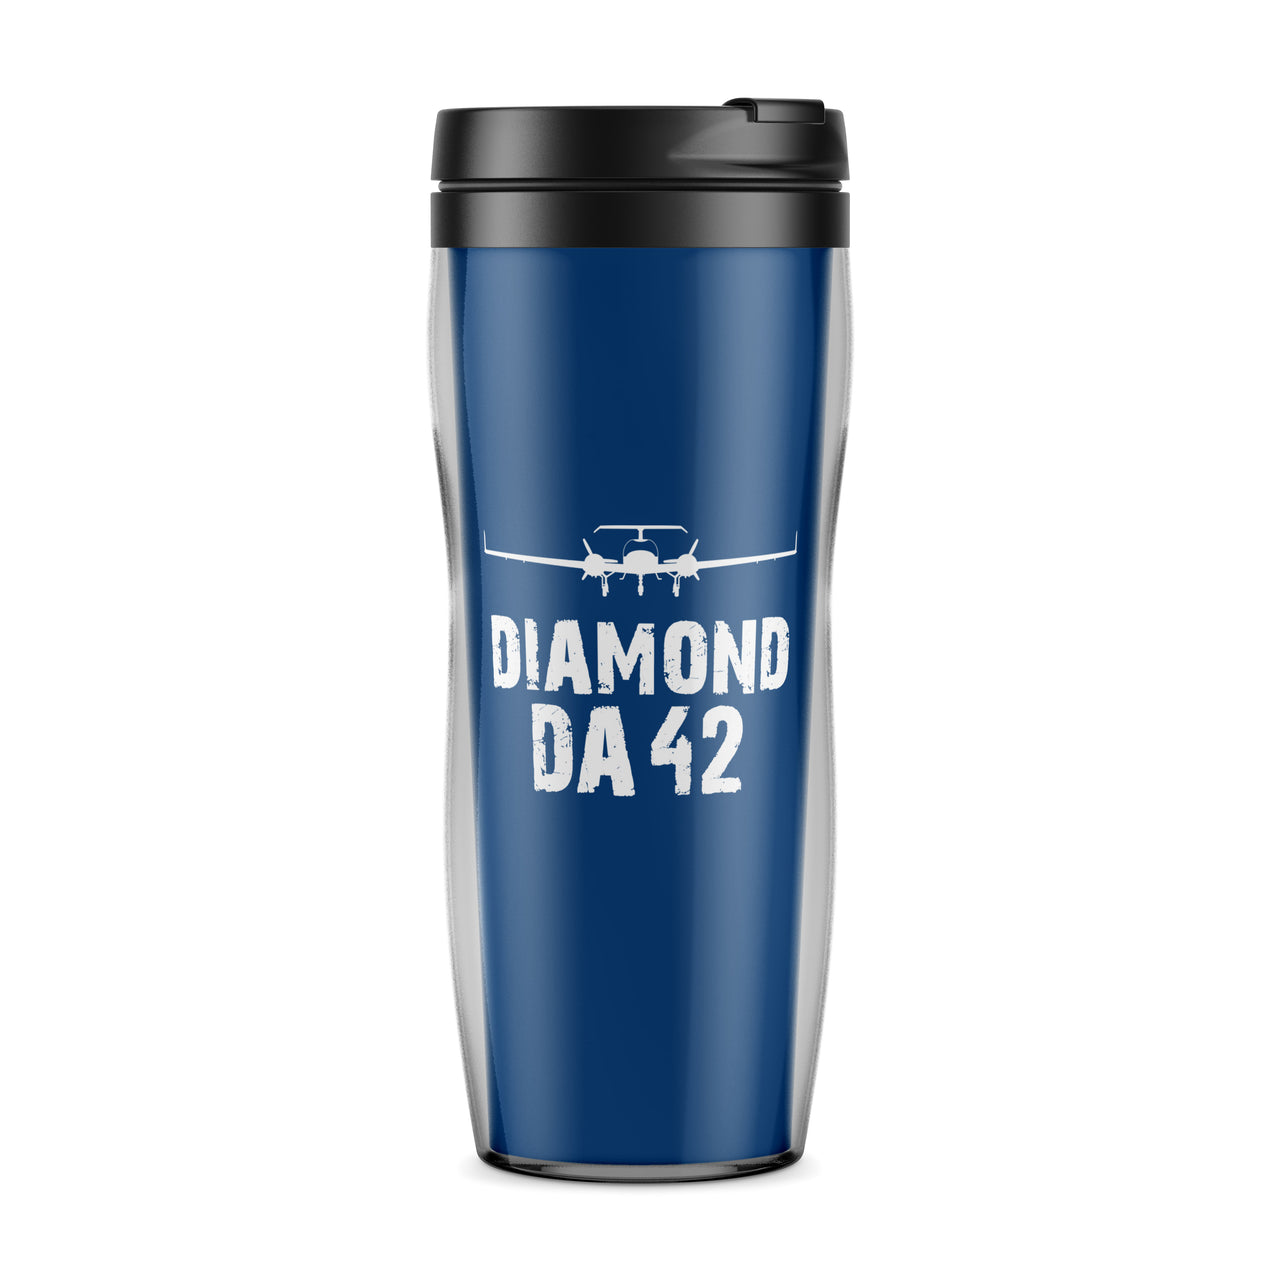 Diamond DA42 & Plane Designed Travel Mugs